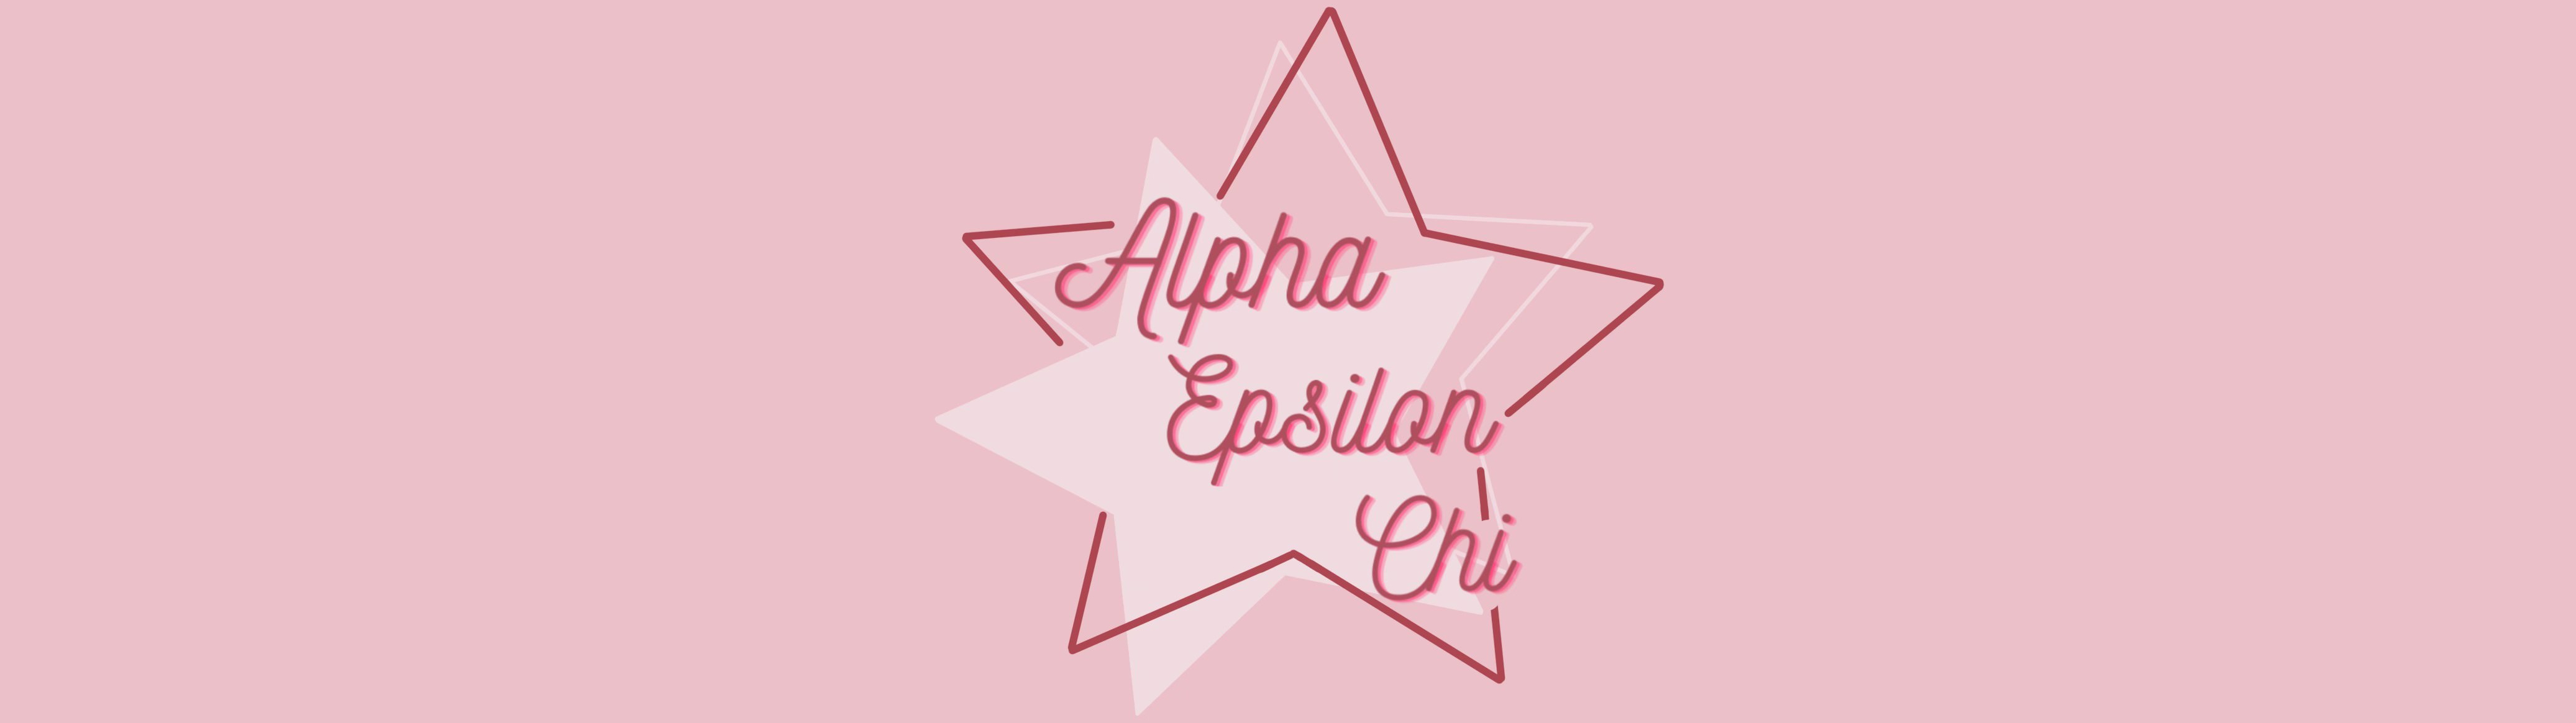 Alpha Epsilon Chi